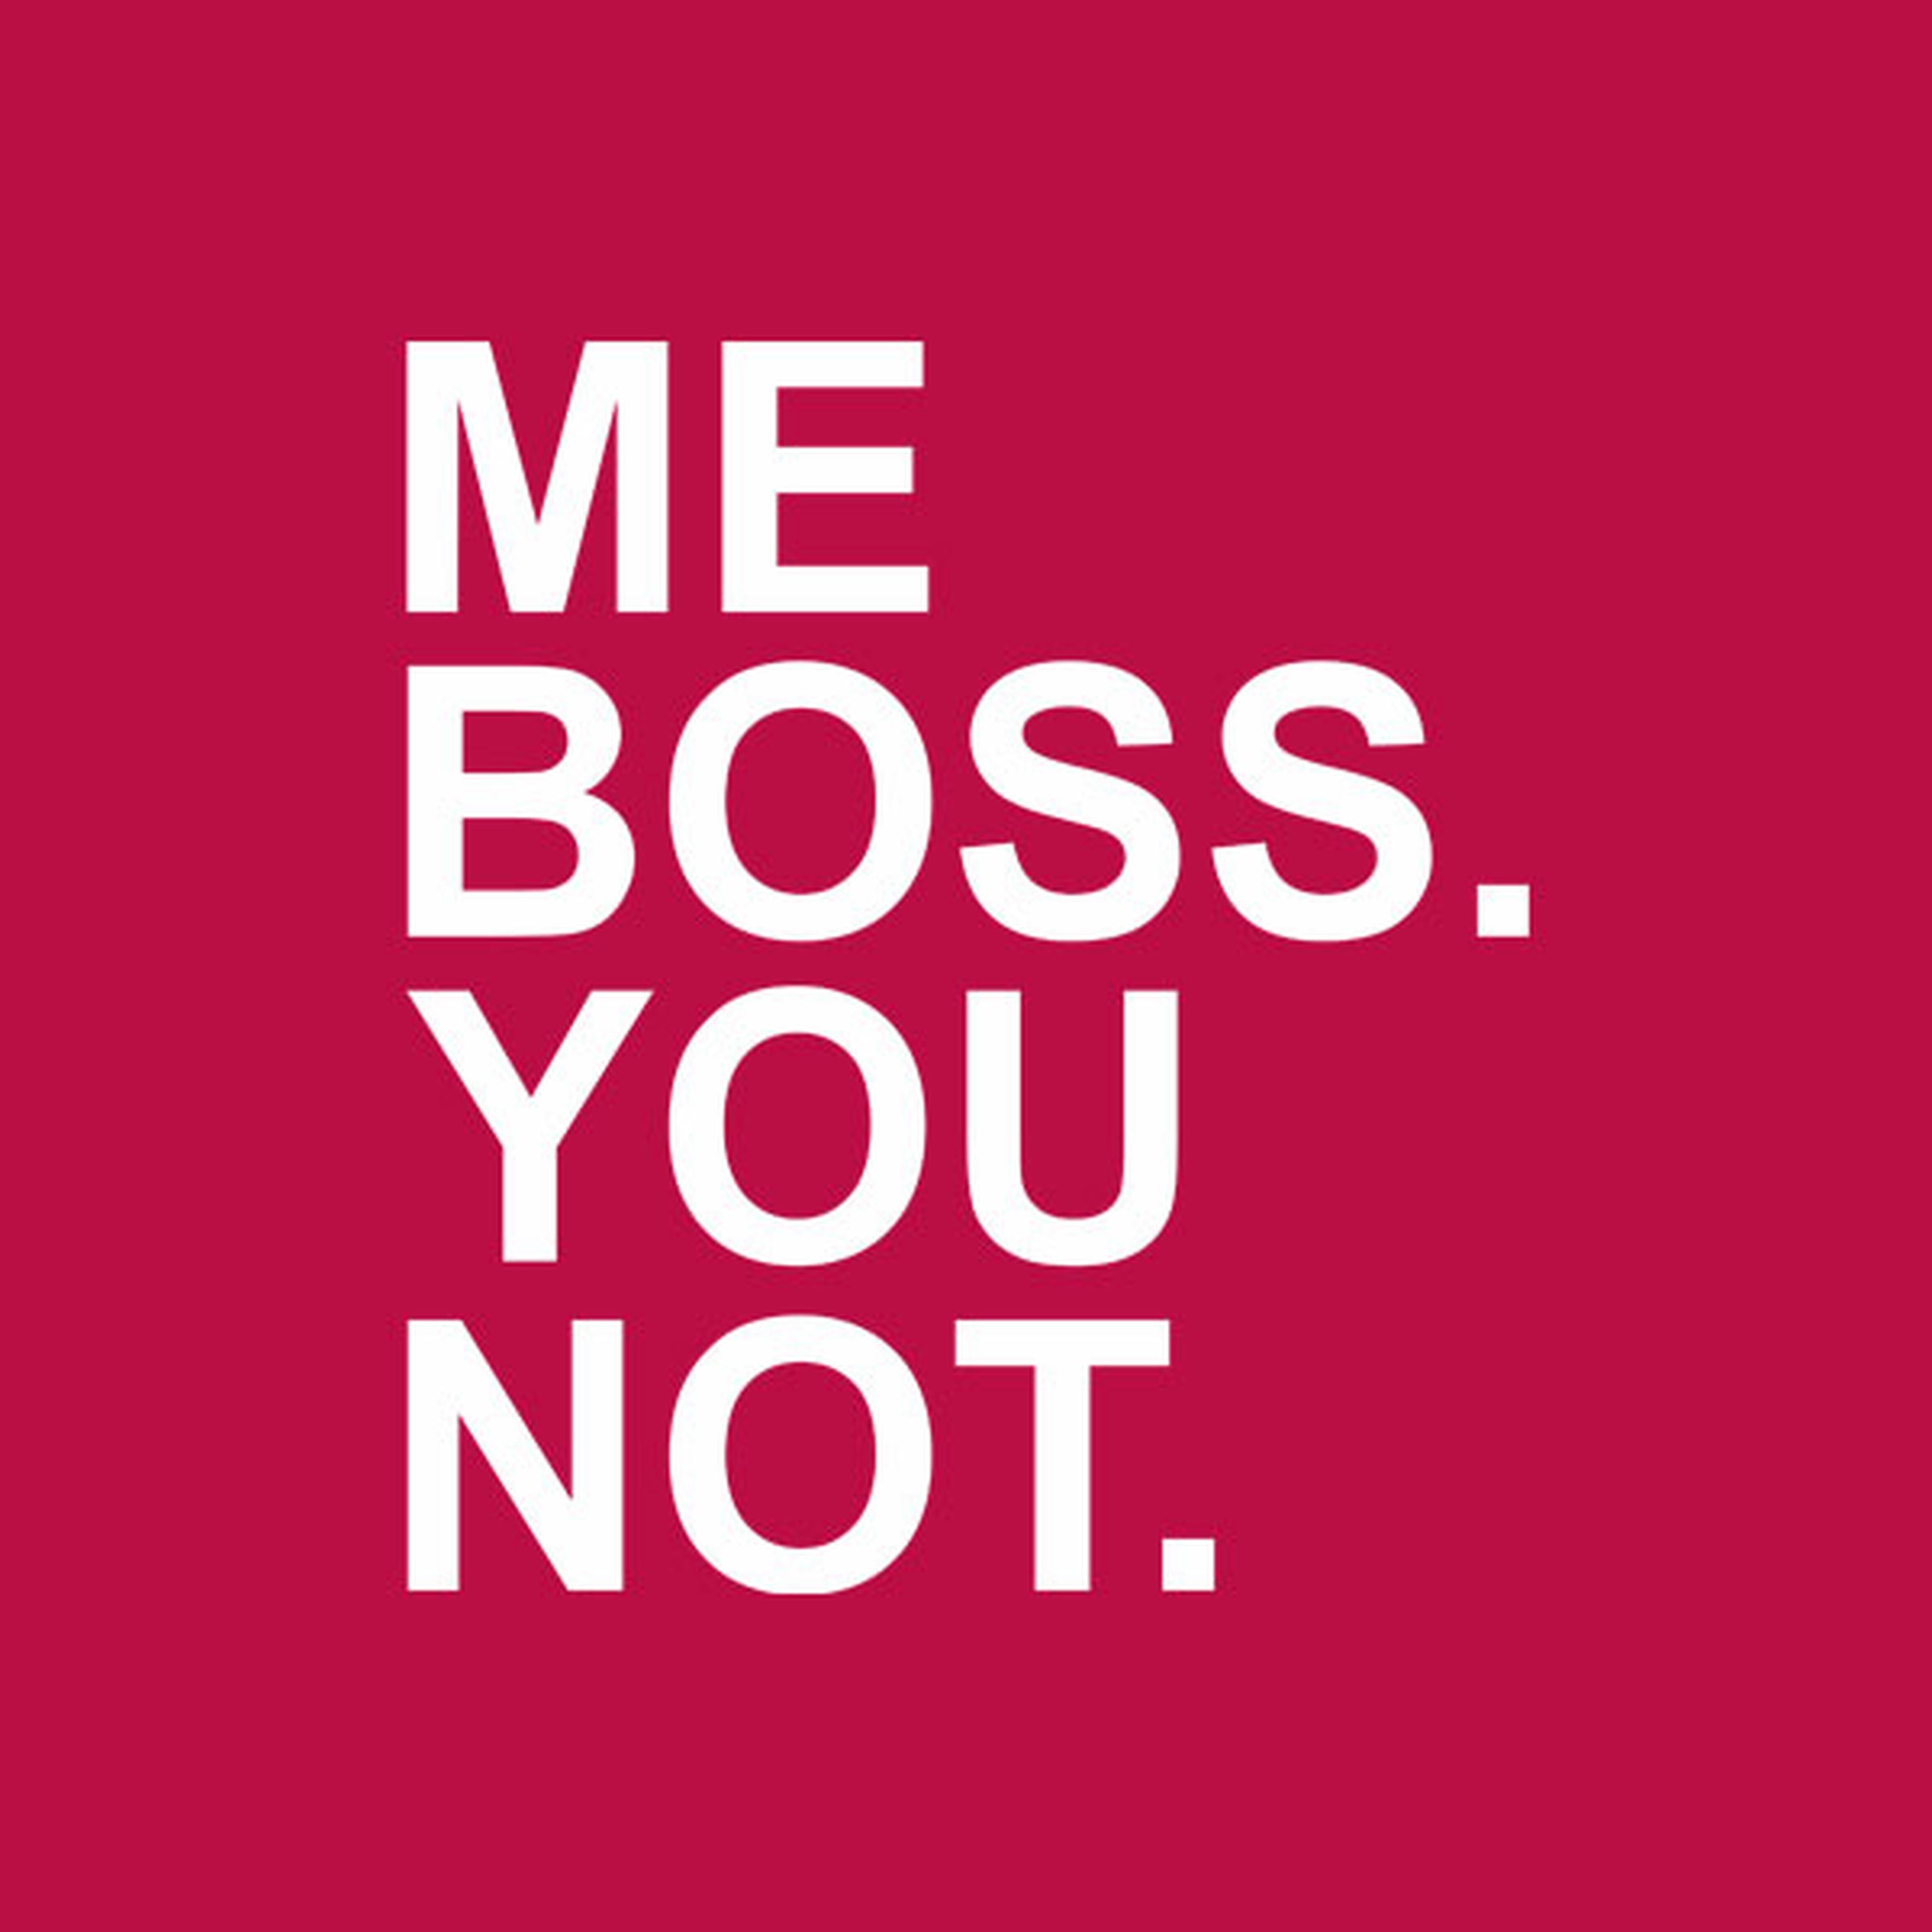 Me boss. You not - T-shirt